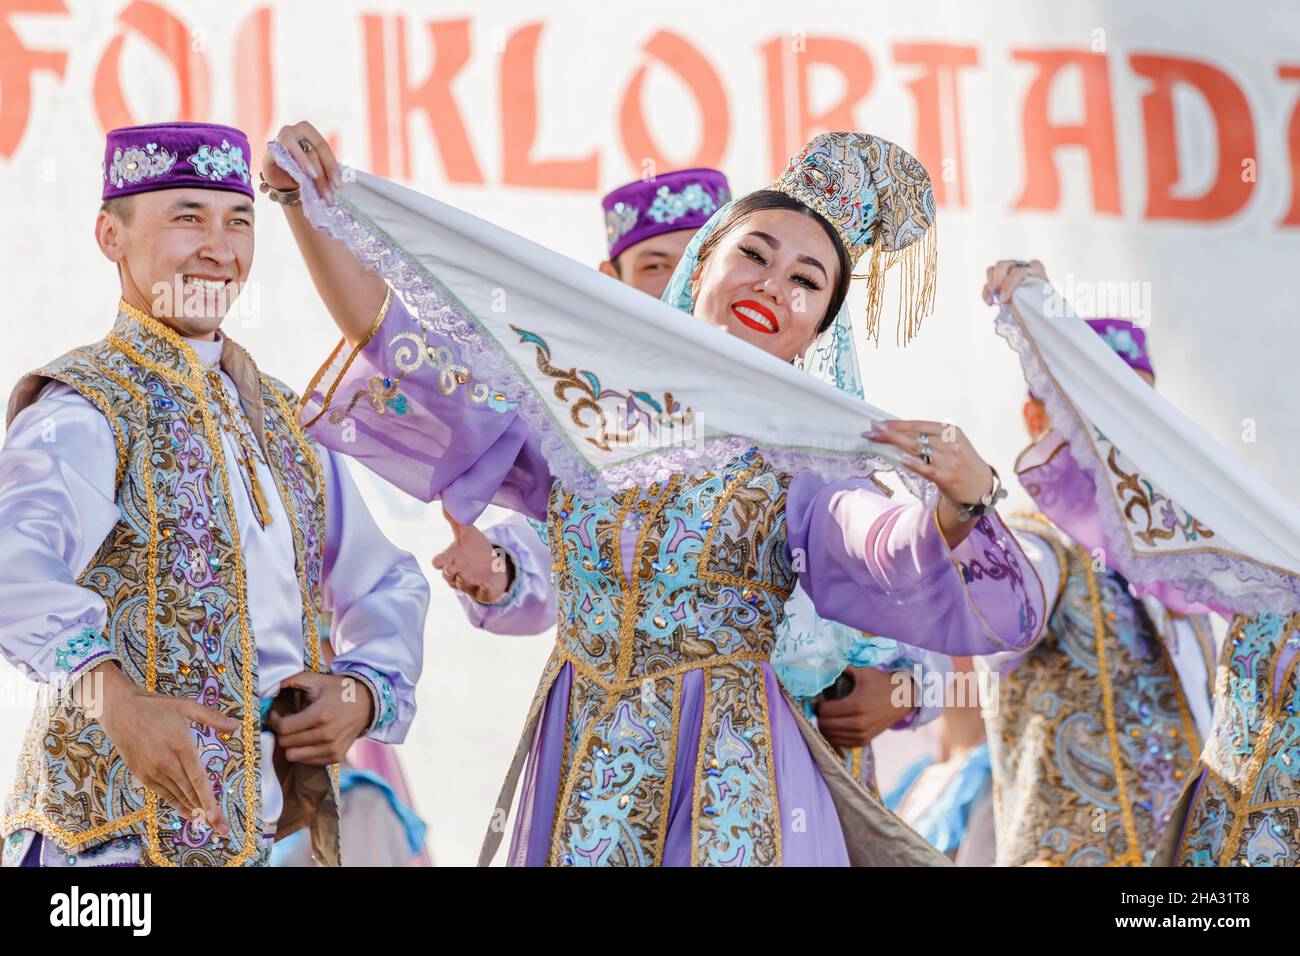 06 July 2021, Ufa, Russia: Tatar National Ensemble dances and sings Stock Photo